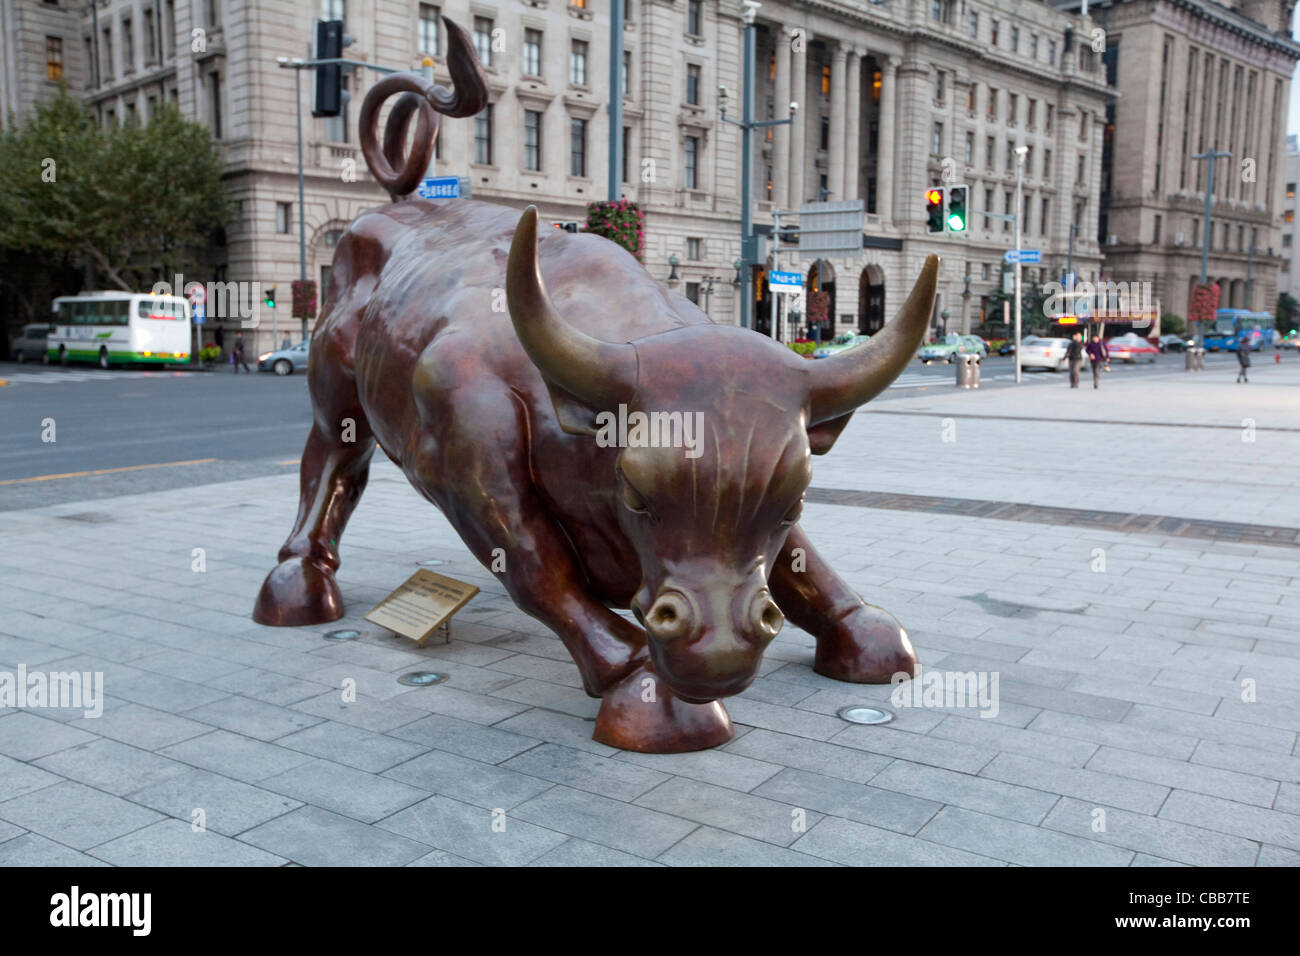 Shanghai Bull Sister of Wall Street Bull Stock Photo - Alamy